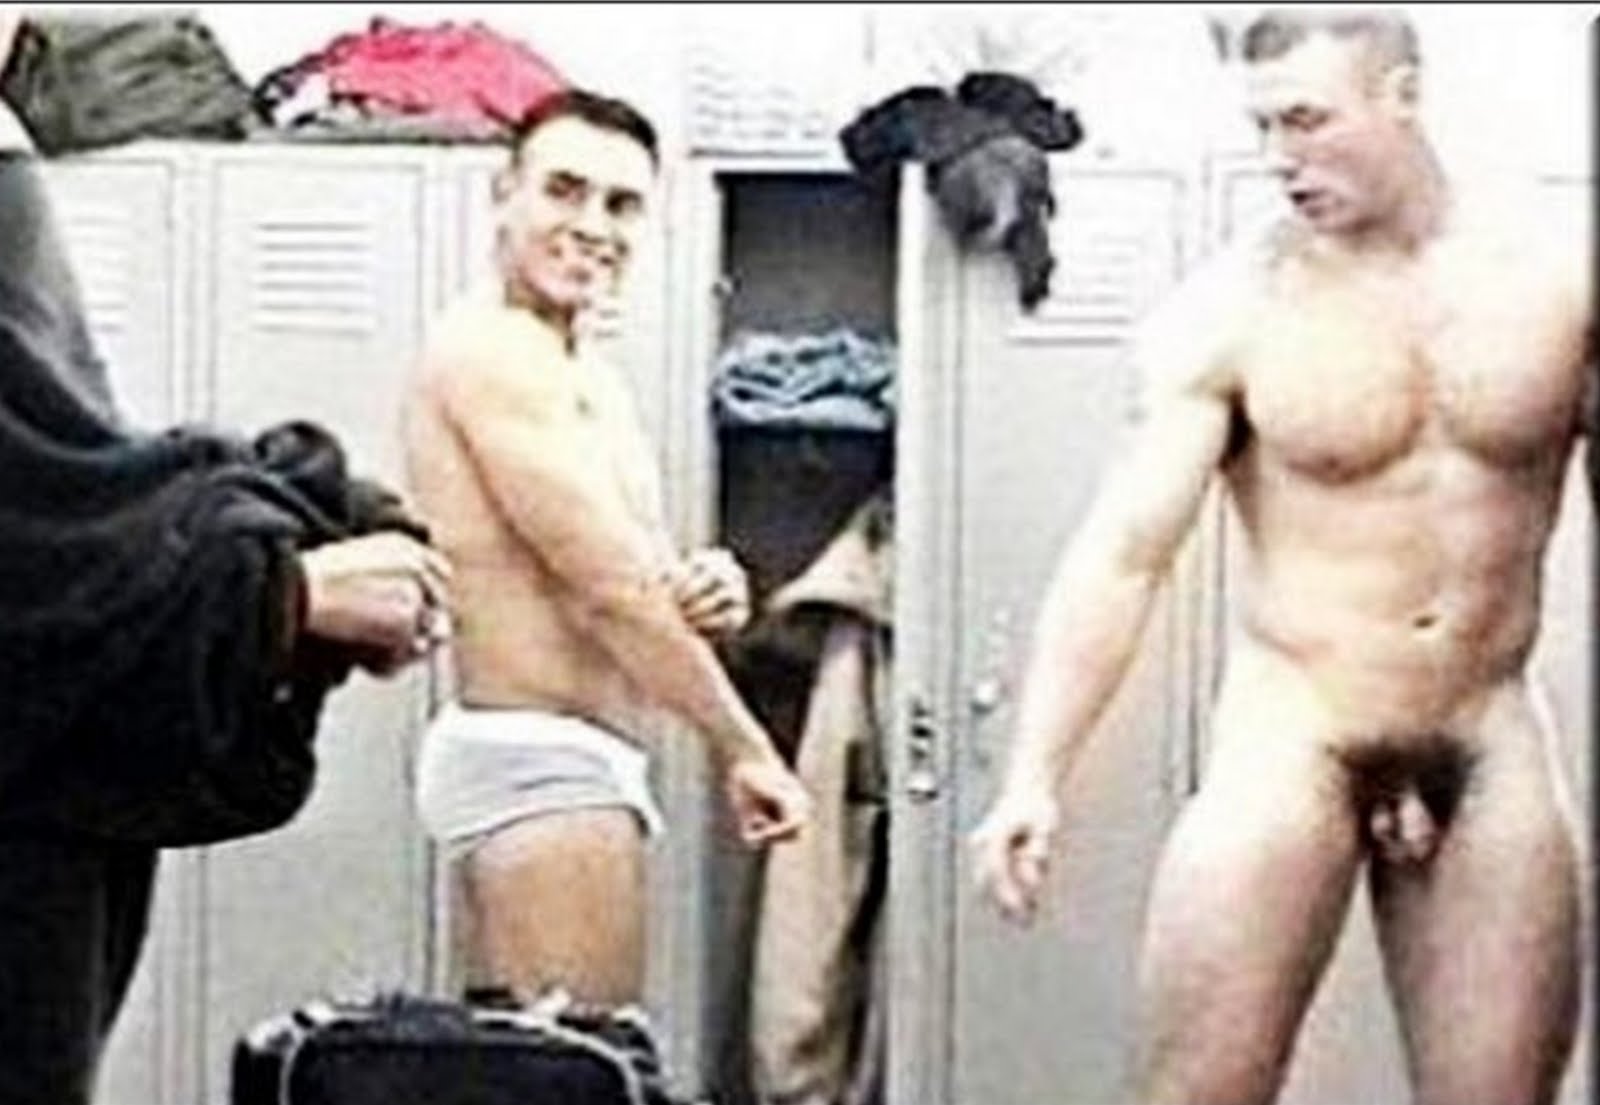 Naked Men Locker Room Spy Cam On Hot Girl Hd Wallpaper Free Download Nude Photo Gallery image